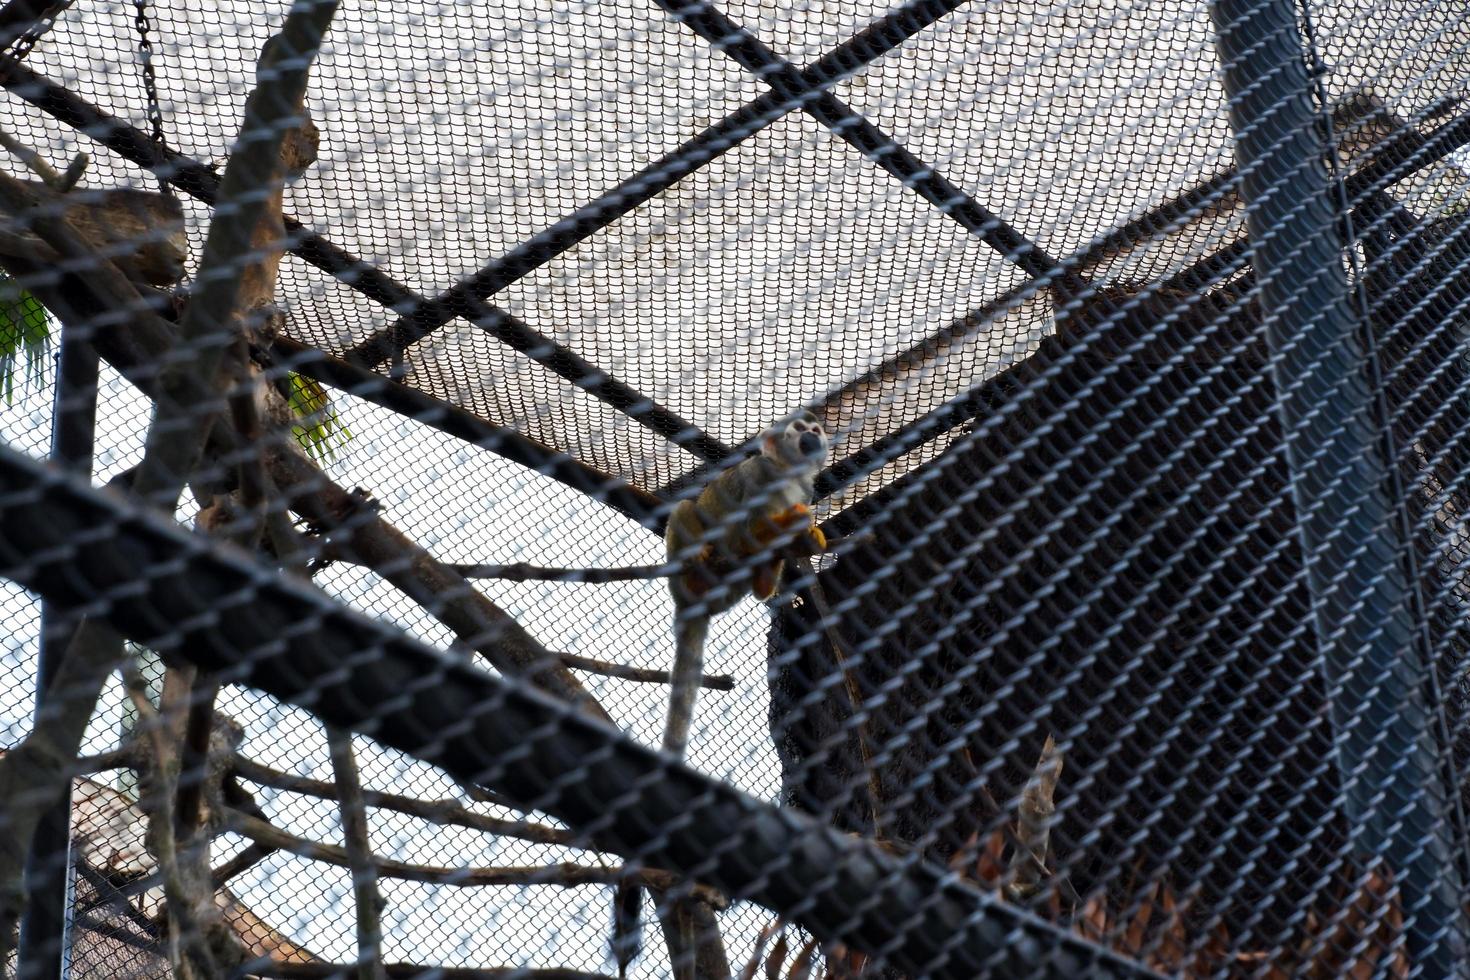 seletivo foco do a nariz achatado dourado macaco pendurado dentro dele jaula. foto